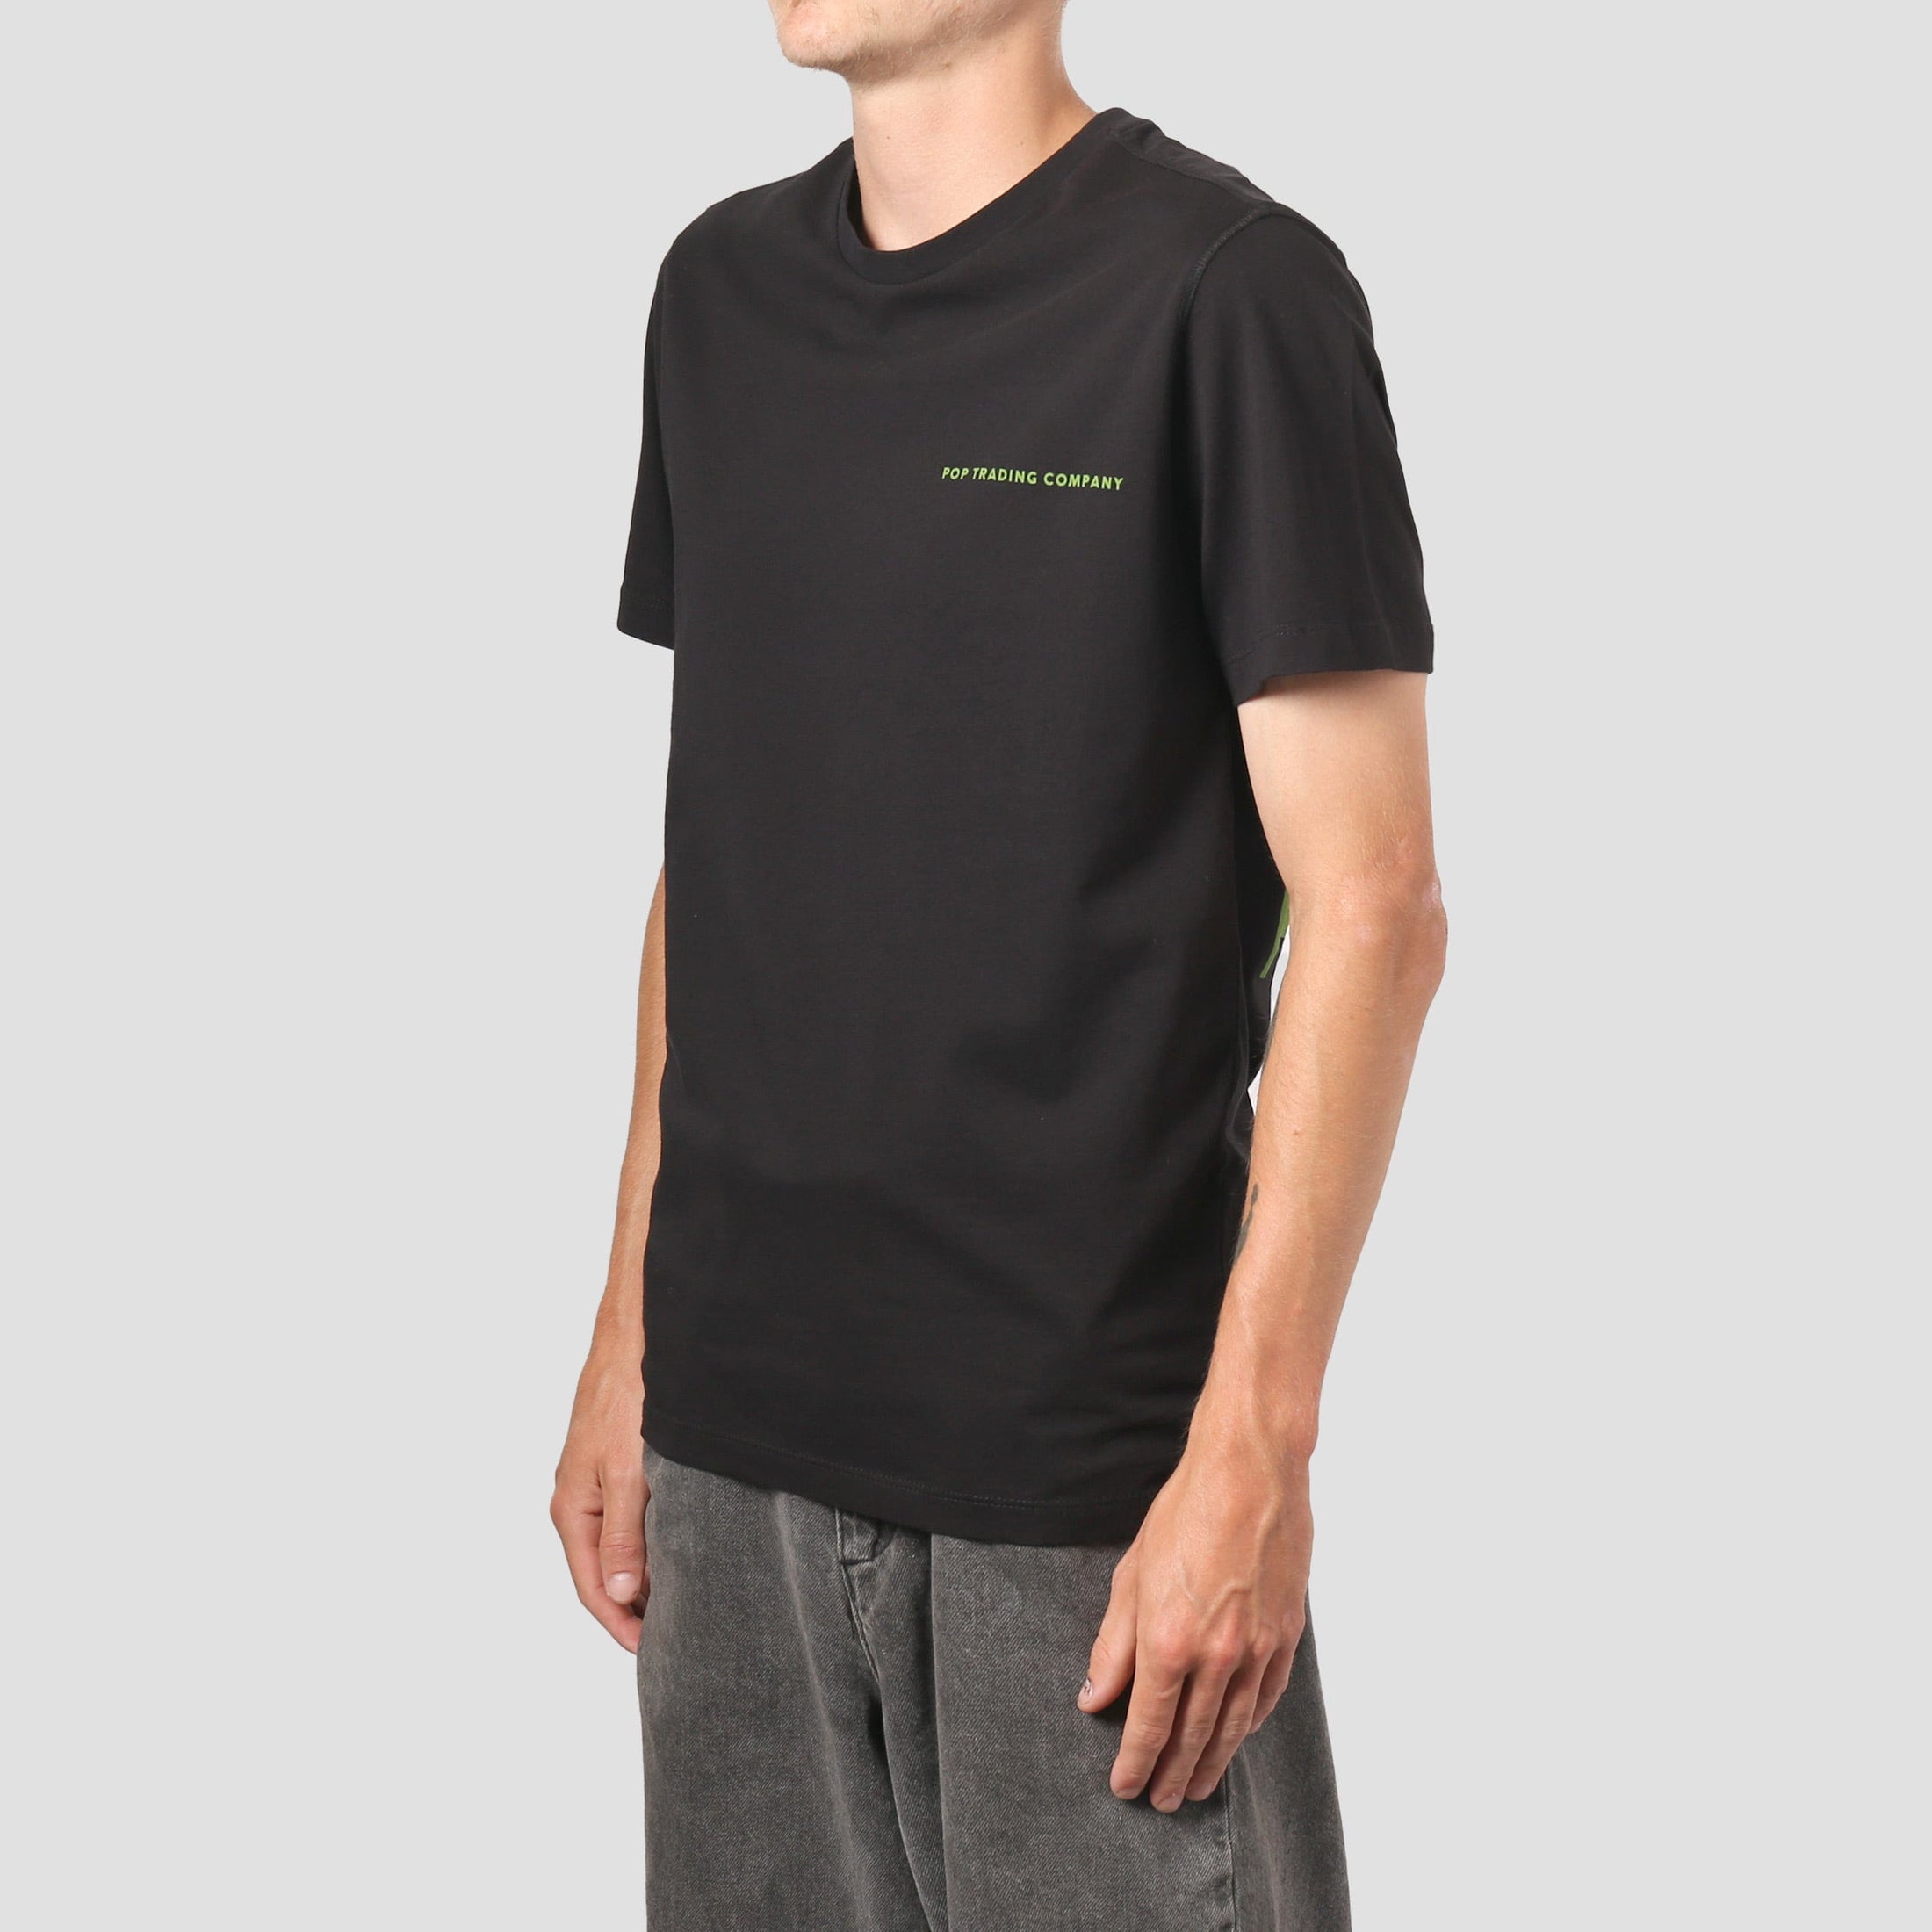 Pop Trading Logo T-Shirt Black / Green